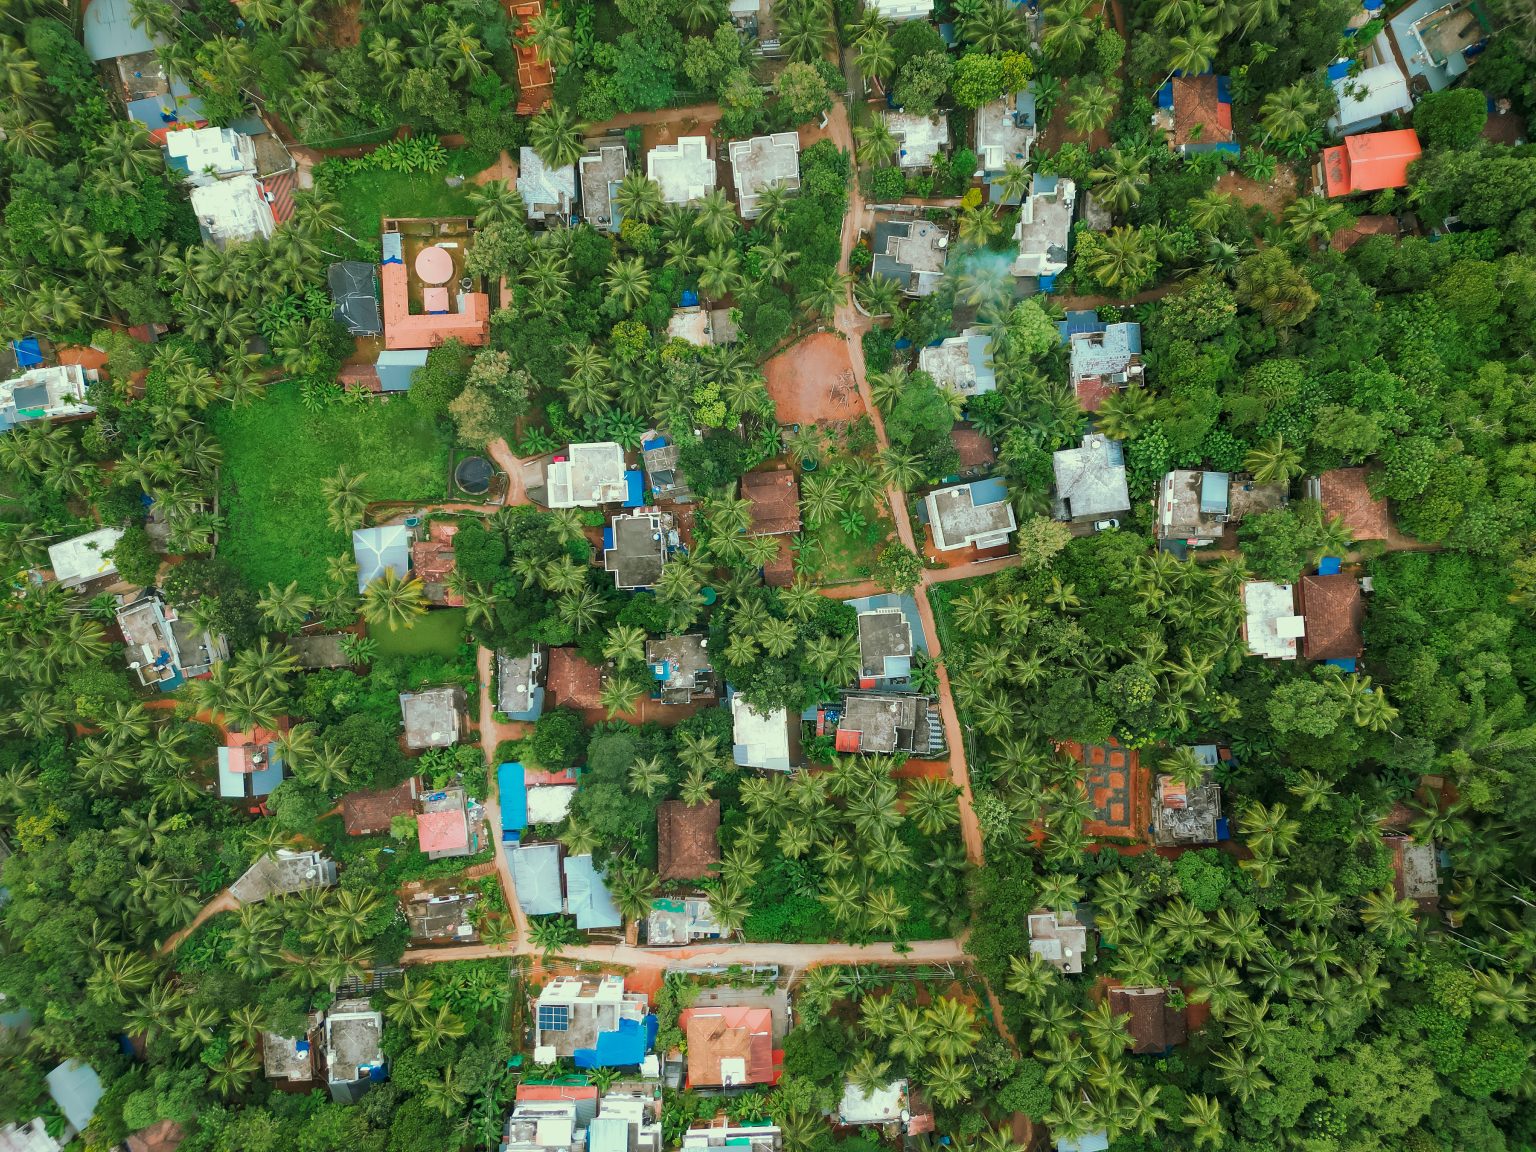 Aerial view of a village, taken from kozhikode, kerala